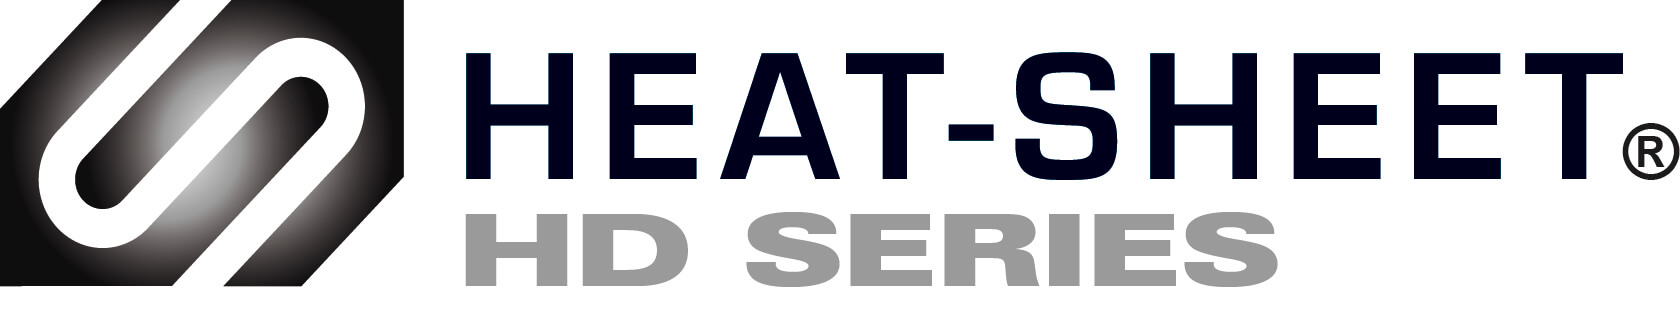 Heat Sheet HD Series logo